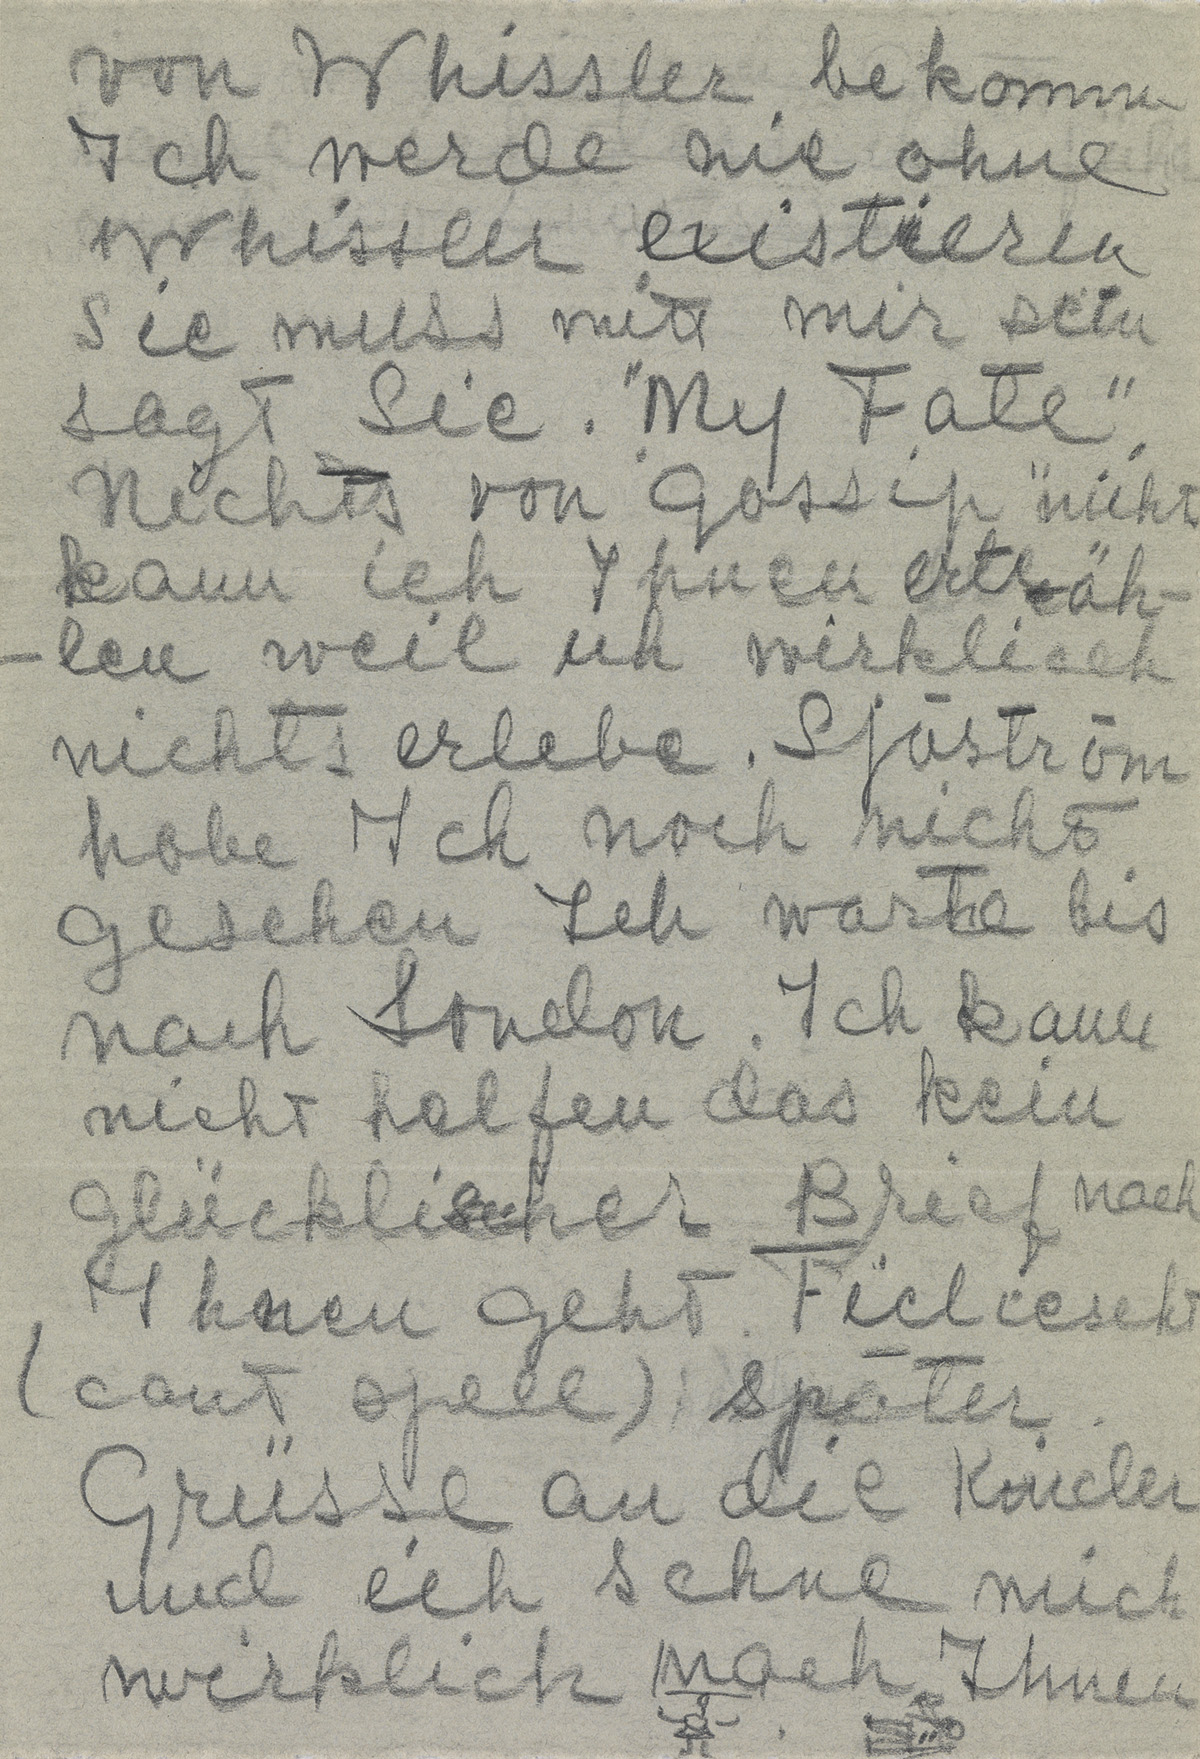 GARBO, GRETA. Archive of over 65 letters to her close friend Salka Viertel (Salka lilla, Salka Liebe, etc.),